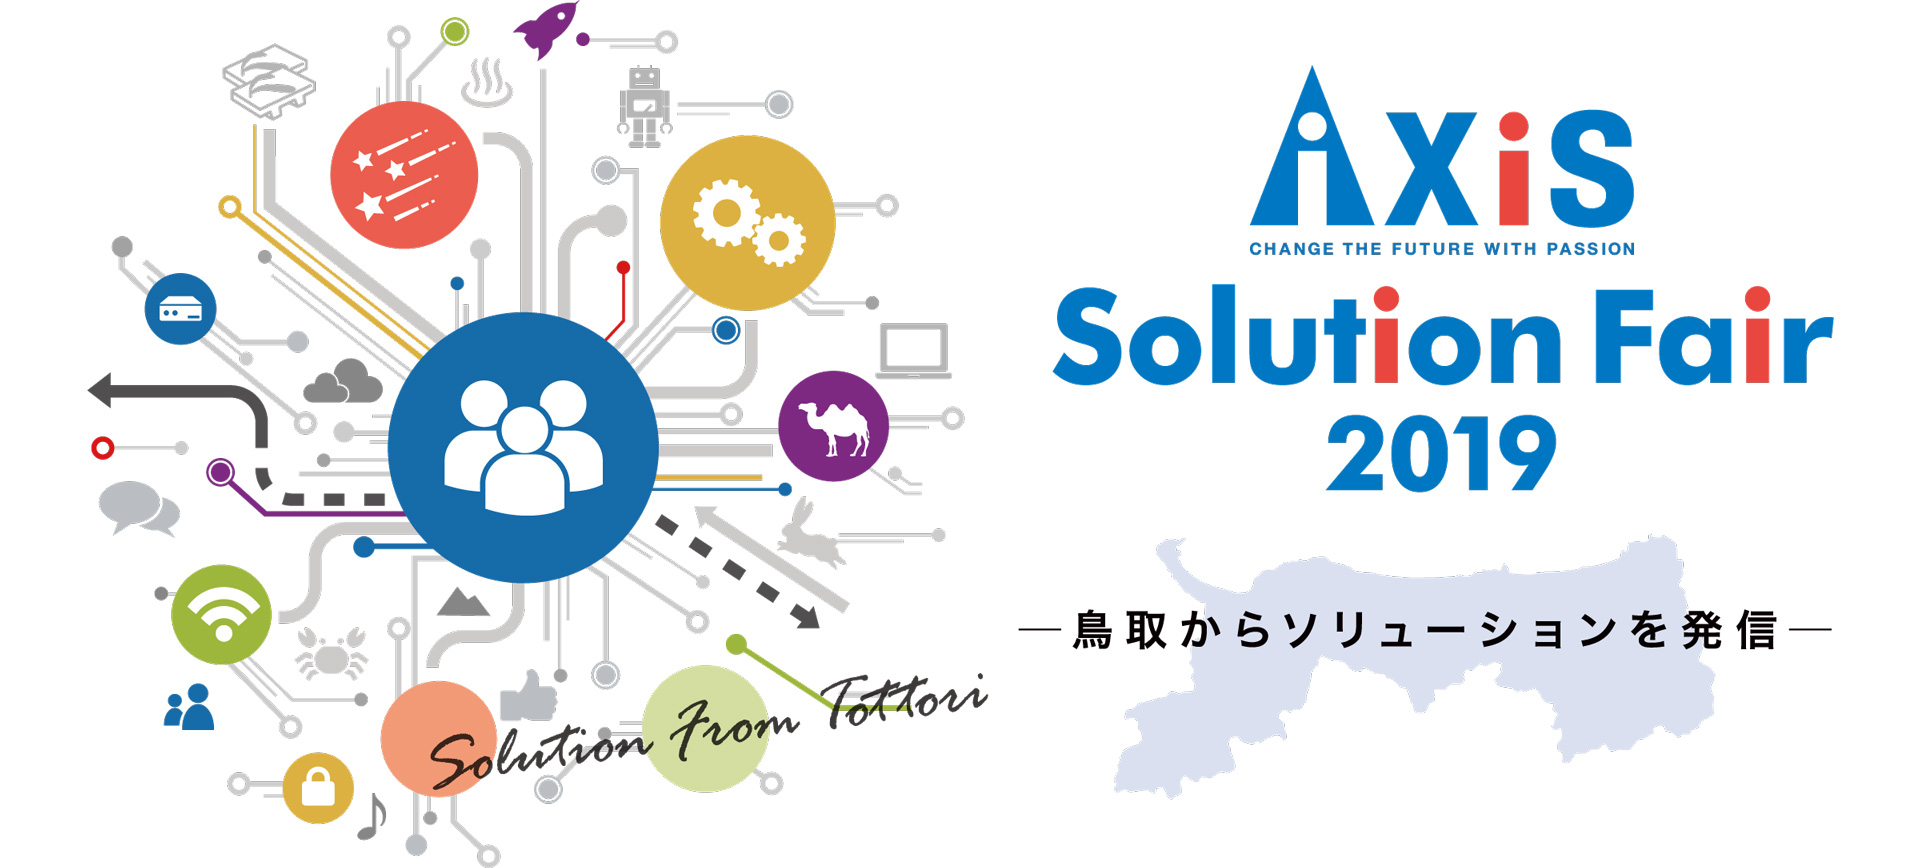 AXIS Solution Fair 2019